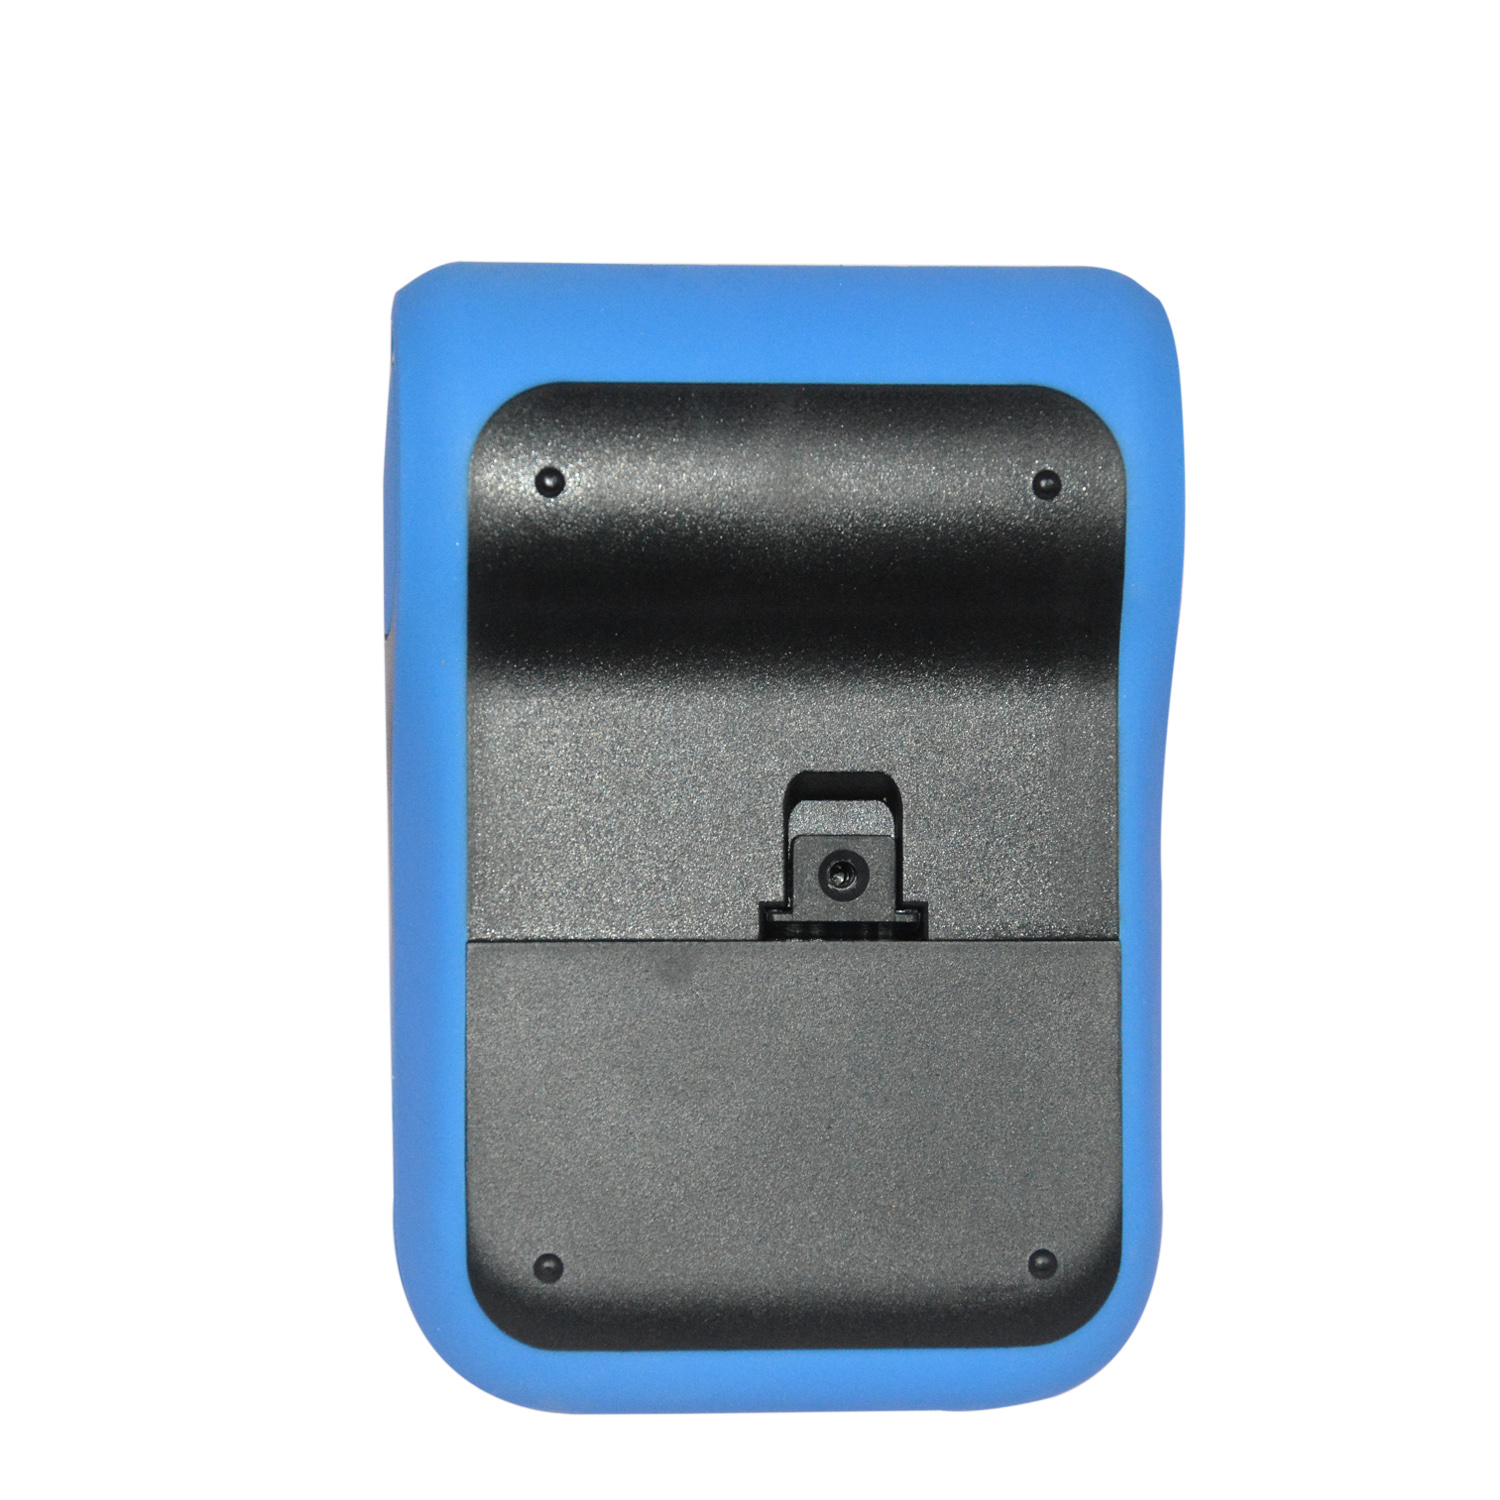 HCCTG Impresora de recibos Bluetooth móvil portátil OEM/ODM de 203 ppp y 58 mm HCC-L21